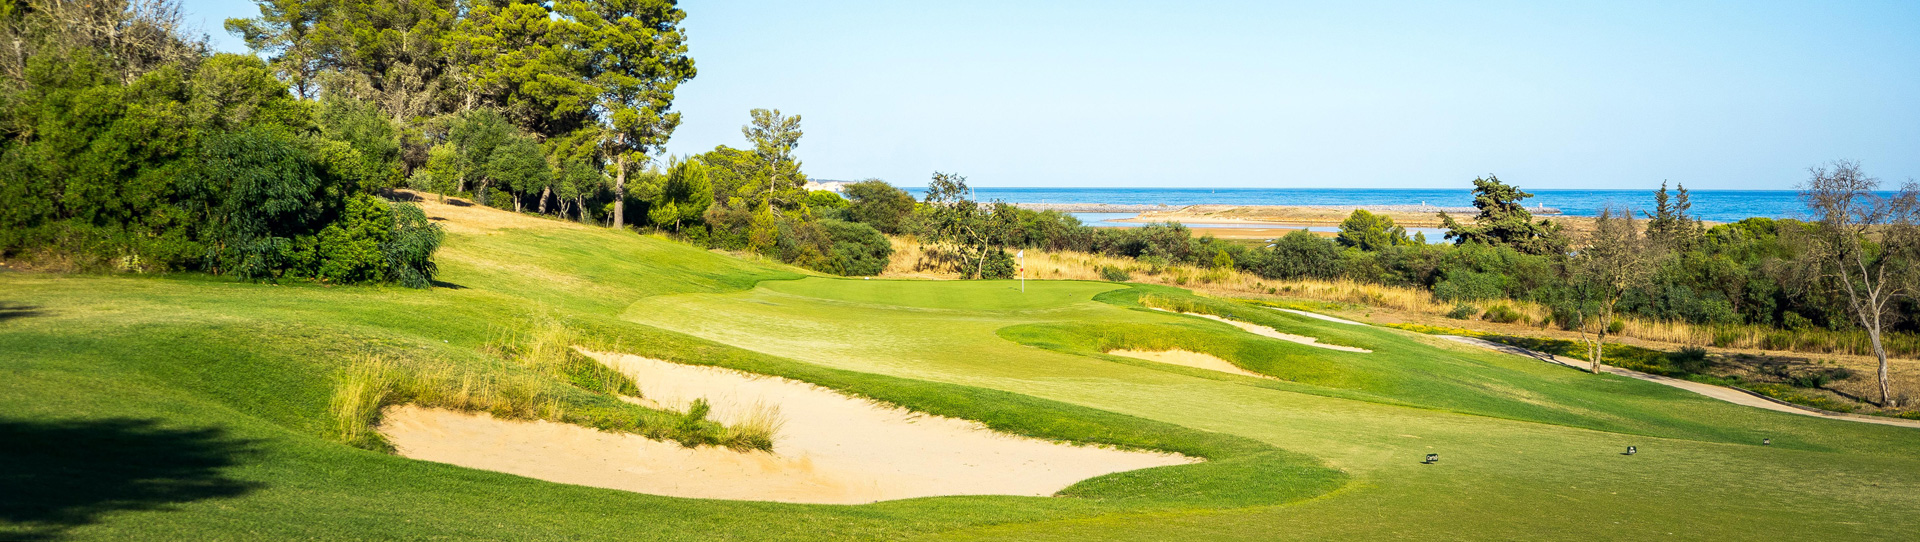 Portugal golf holidays - Amendoeira & Palmares Experience - Photo 1